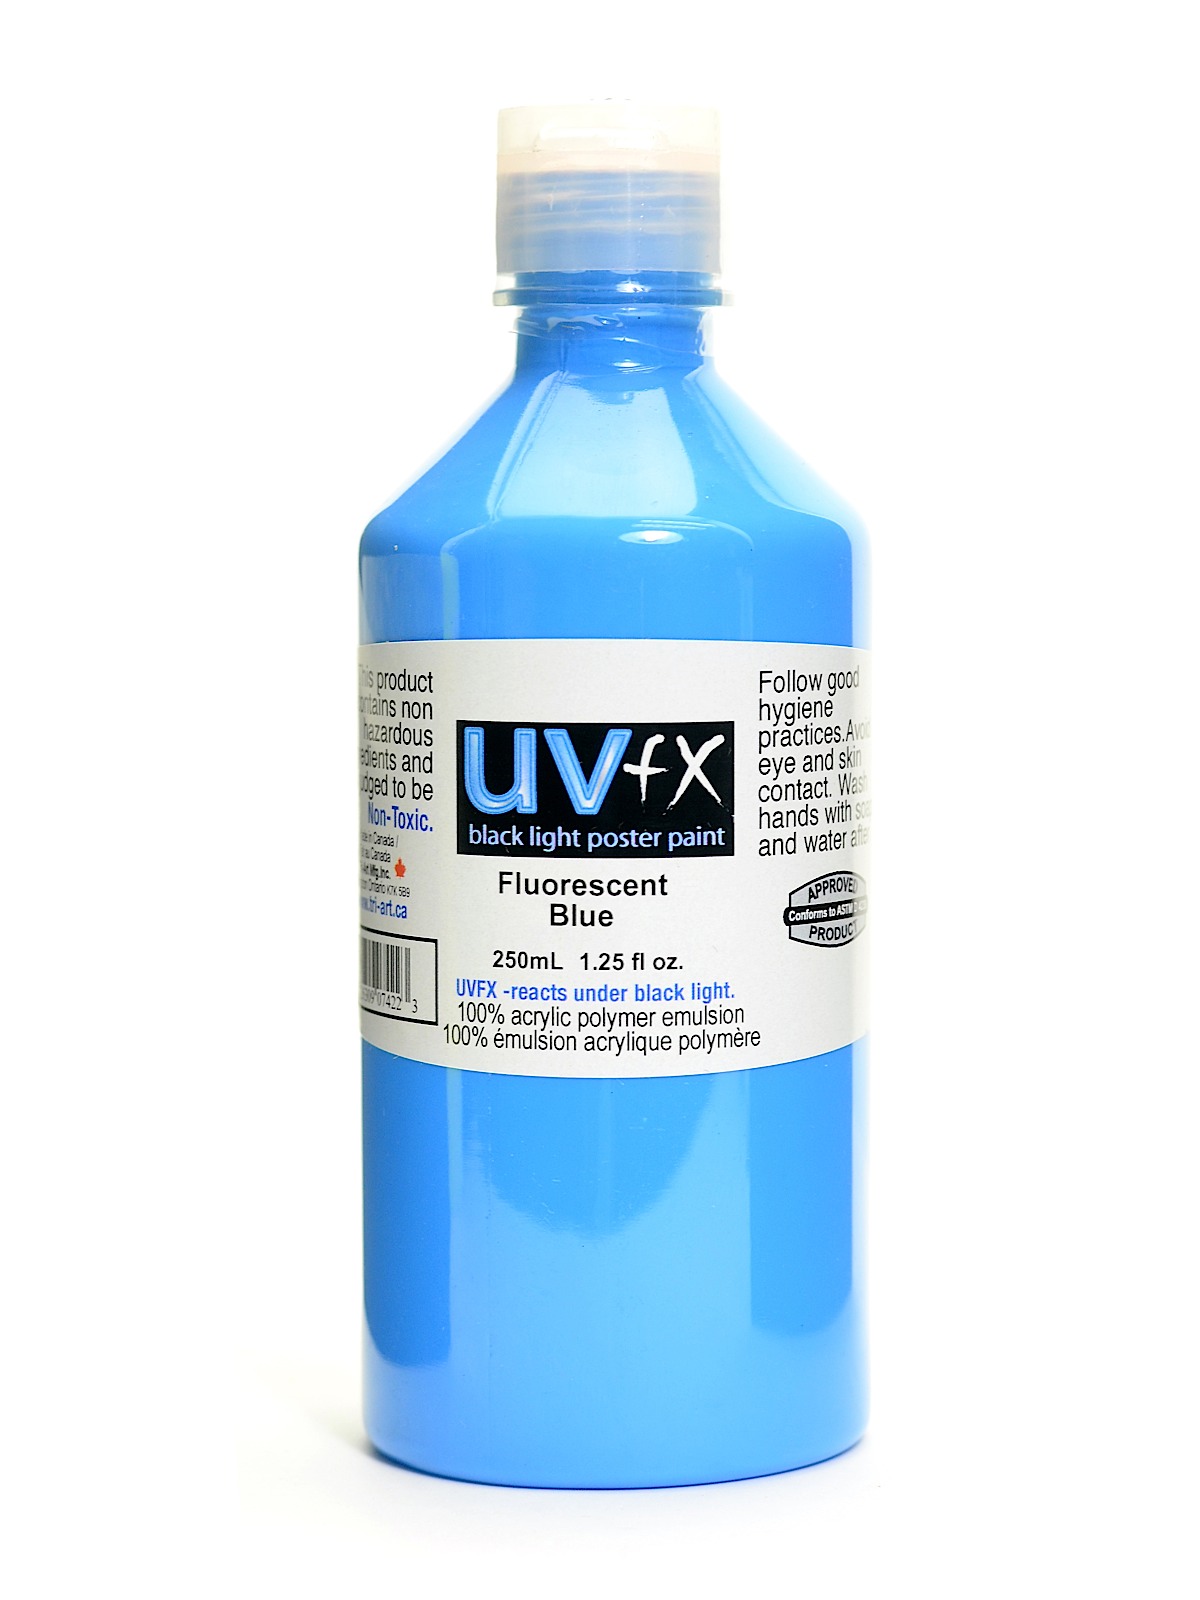 Uvfx Black Light Poster Paint Fluorescent Blue 250 Ml Bottle